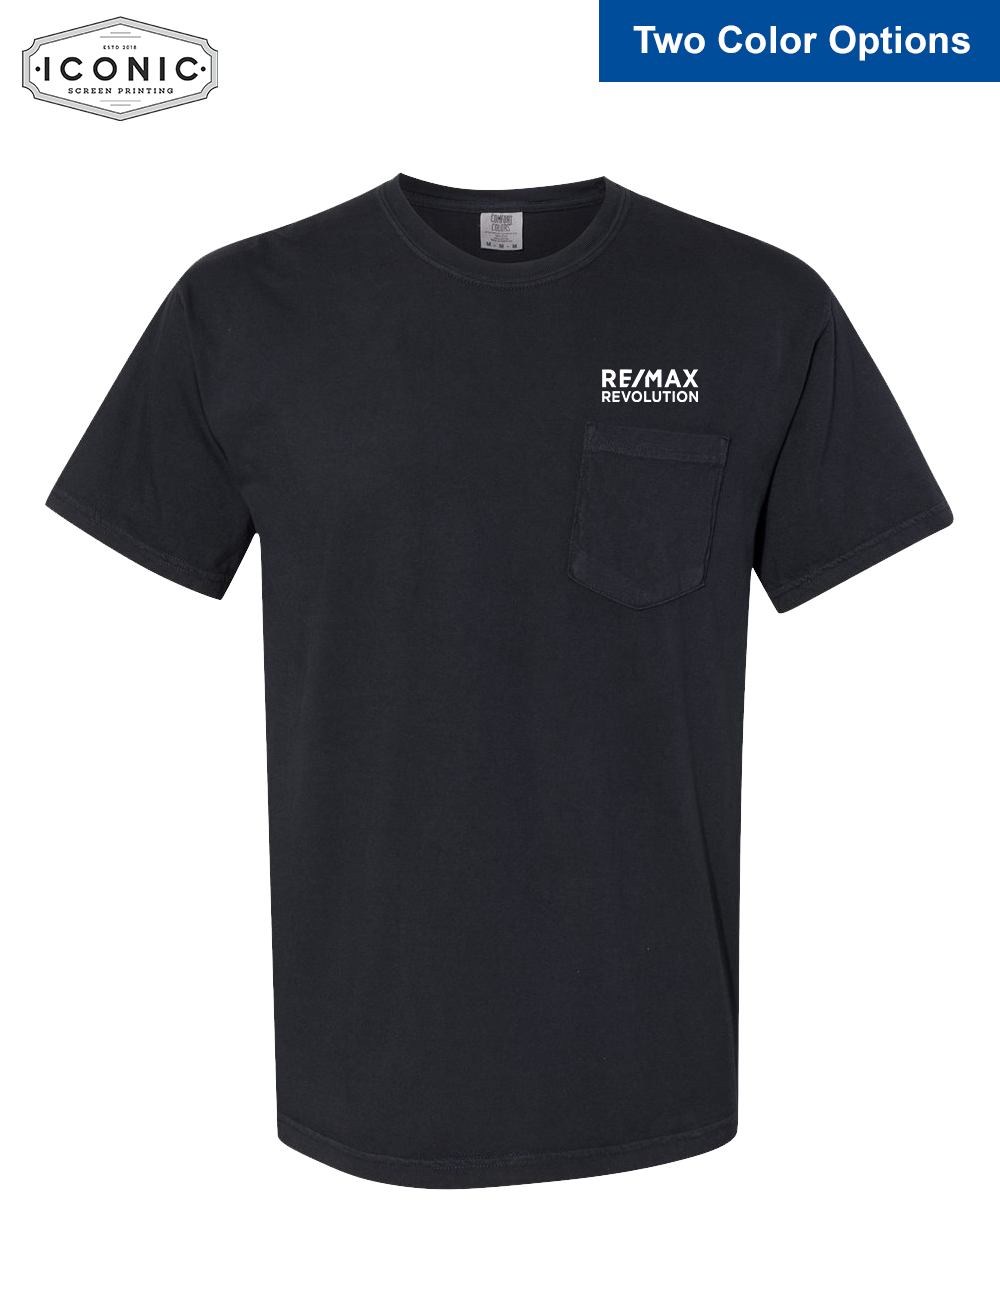 RE/MAX Revolution - Comfort Colors Garment-Dyed Heavyweight Pocket T-Shirt - Print